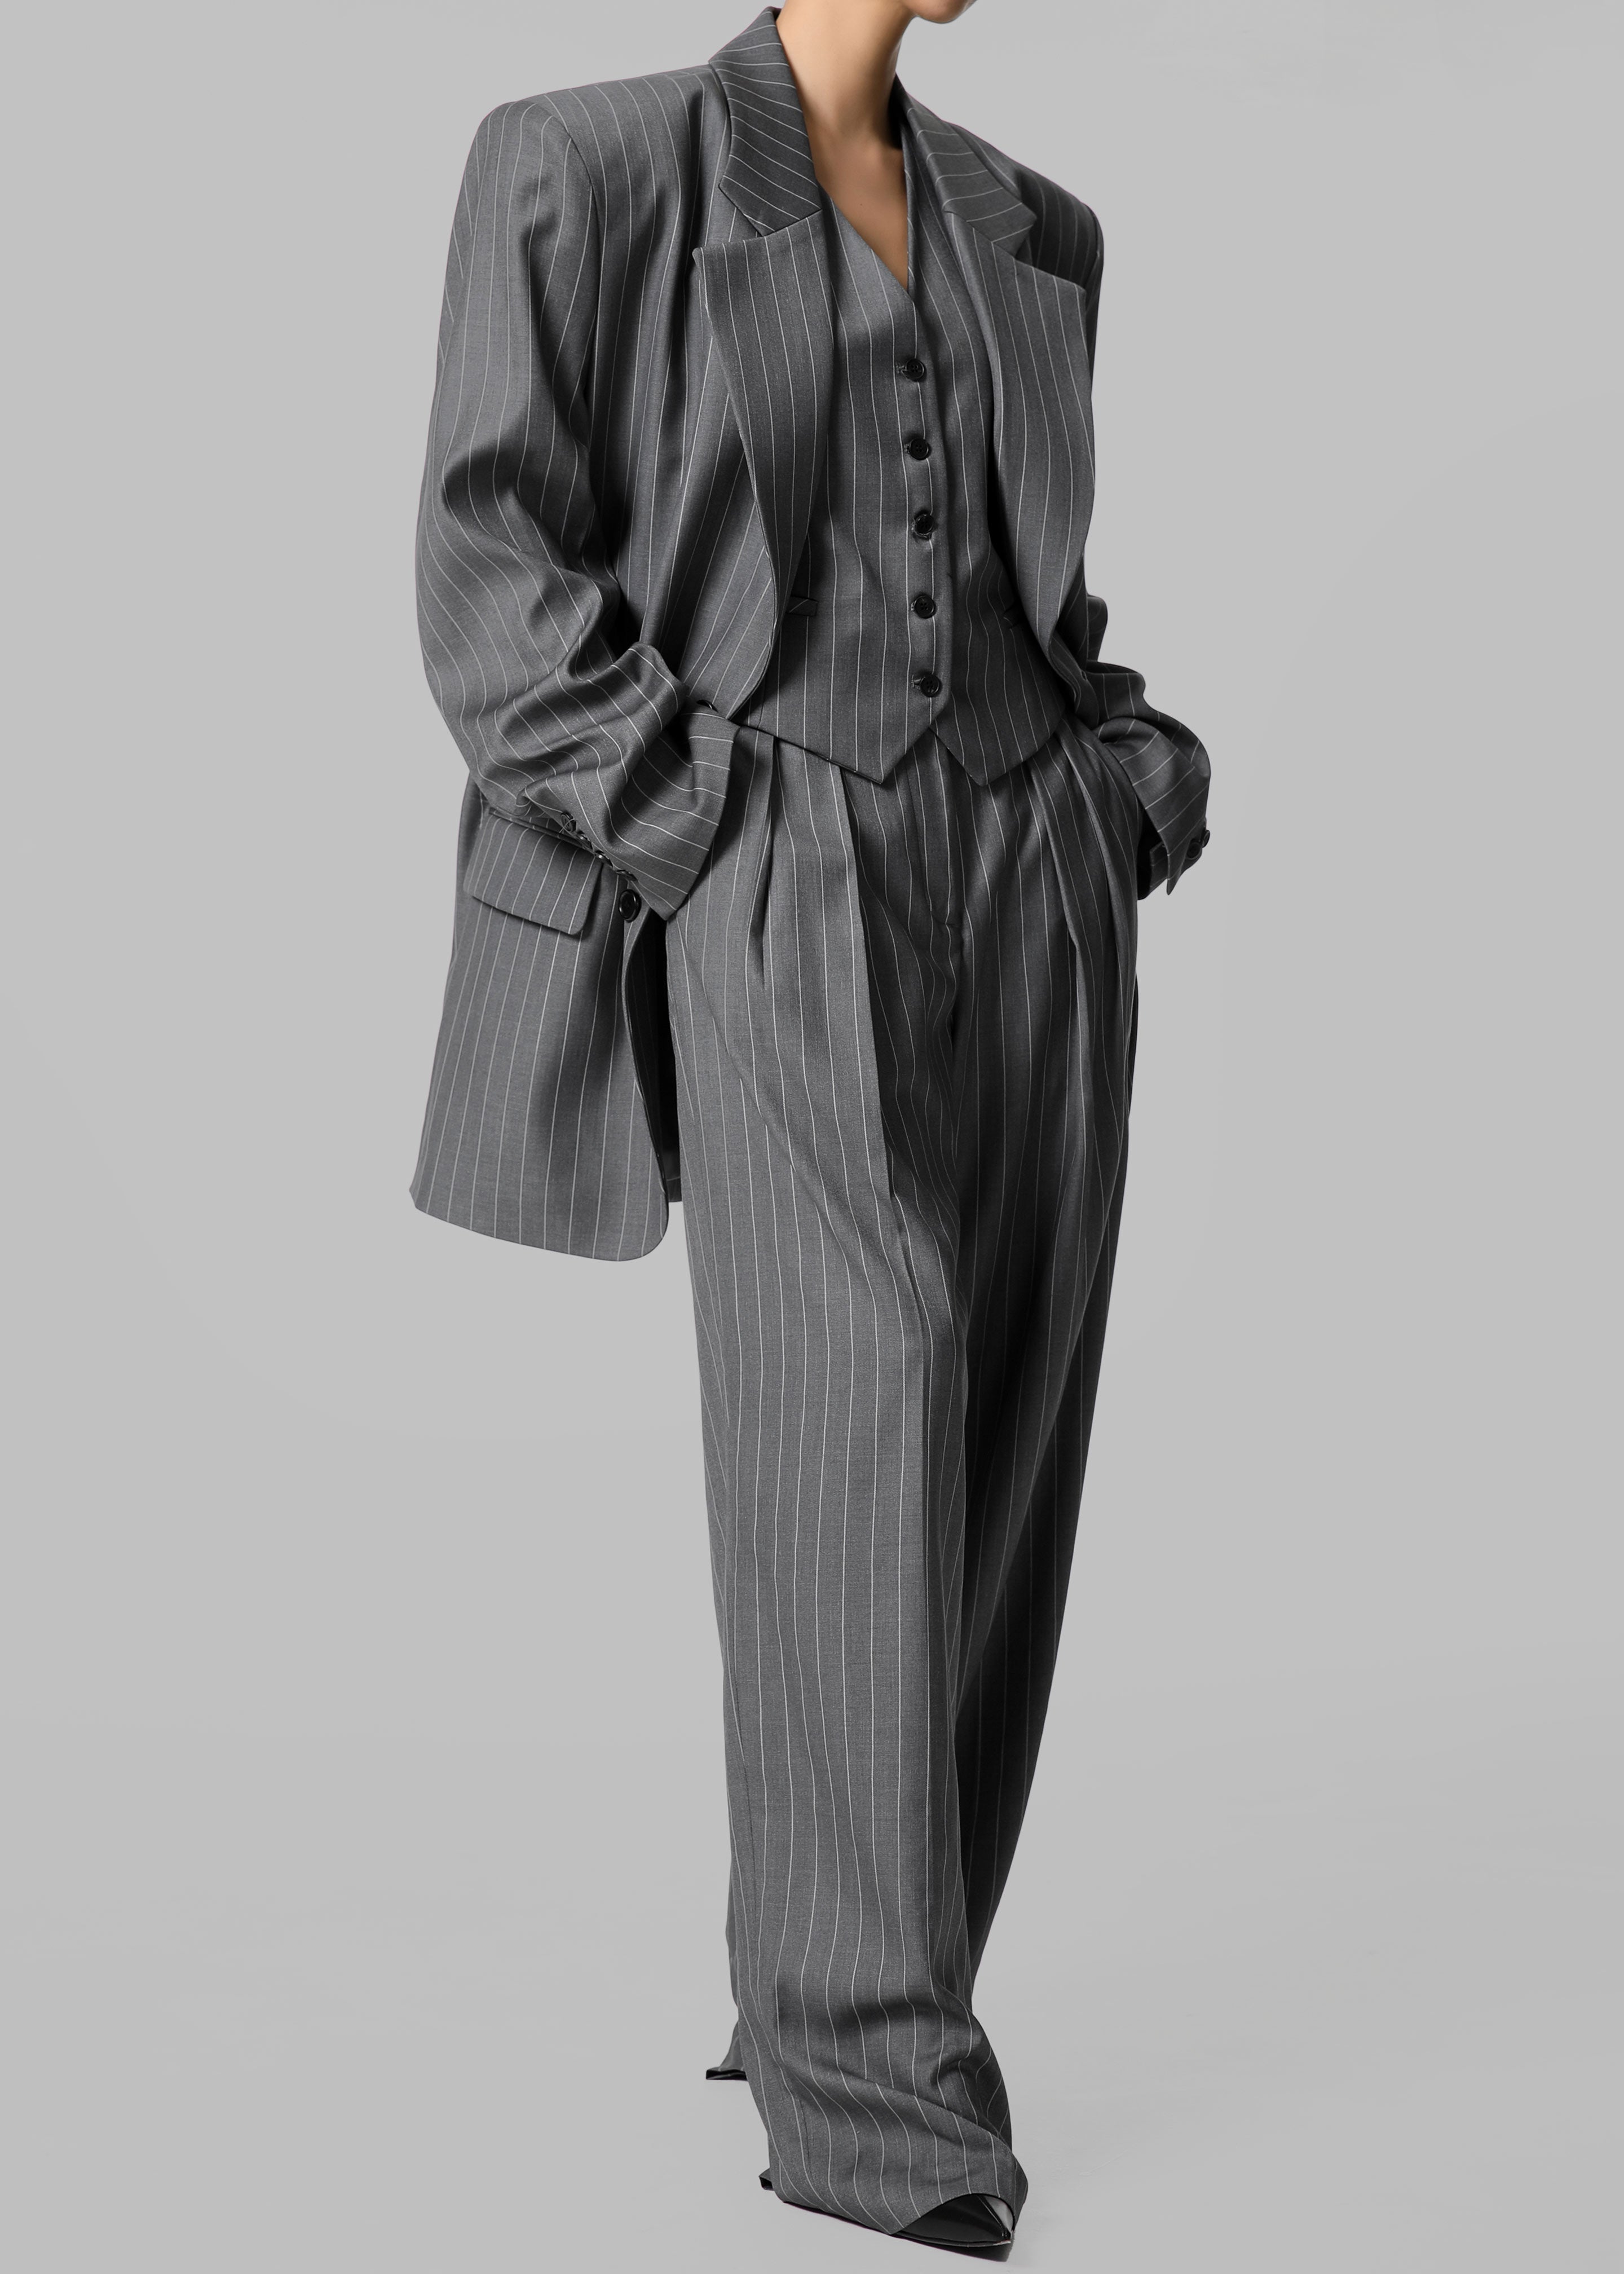 Holland Suit Vest - Charcoal/White Pinstripe - 9